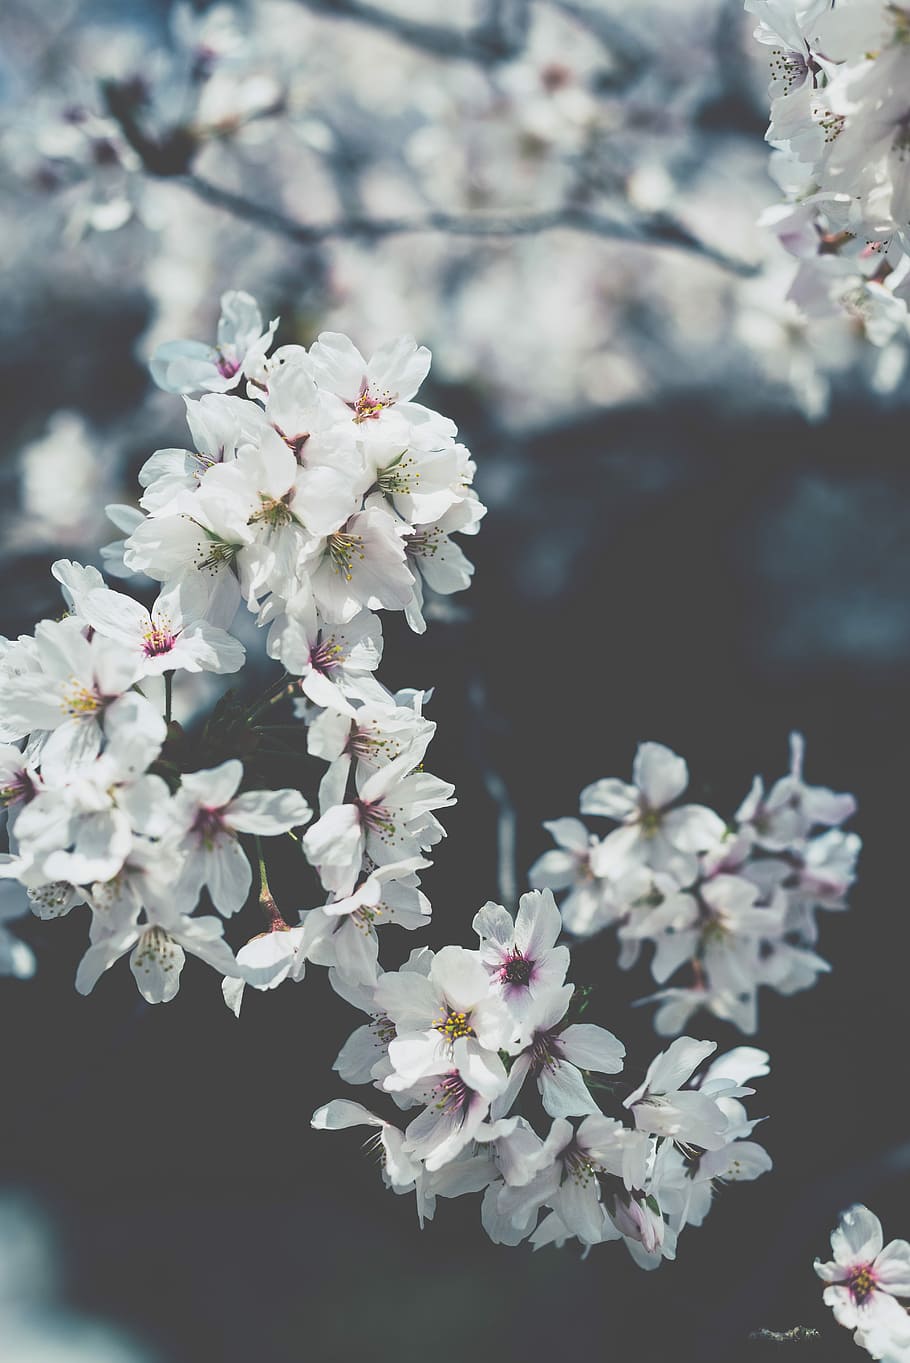 A close up of some white flowers - Cherry blossom